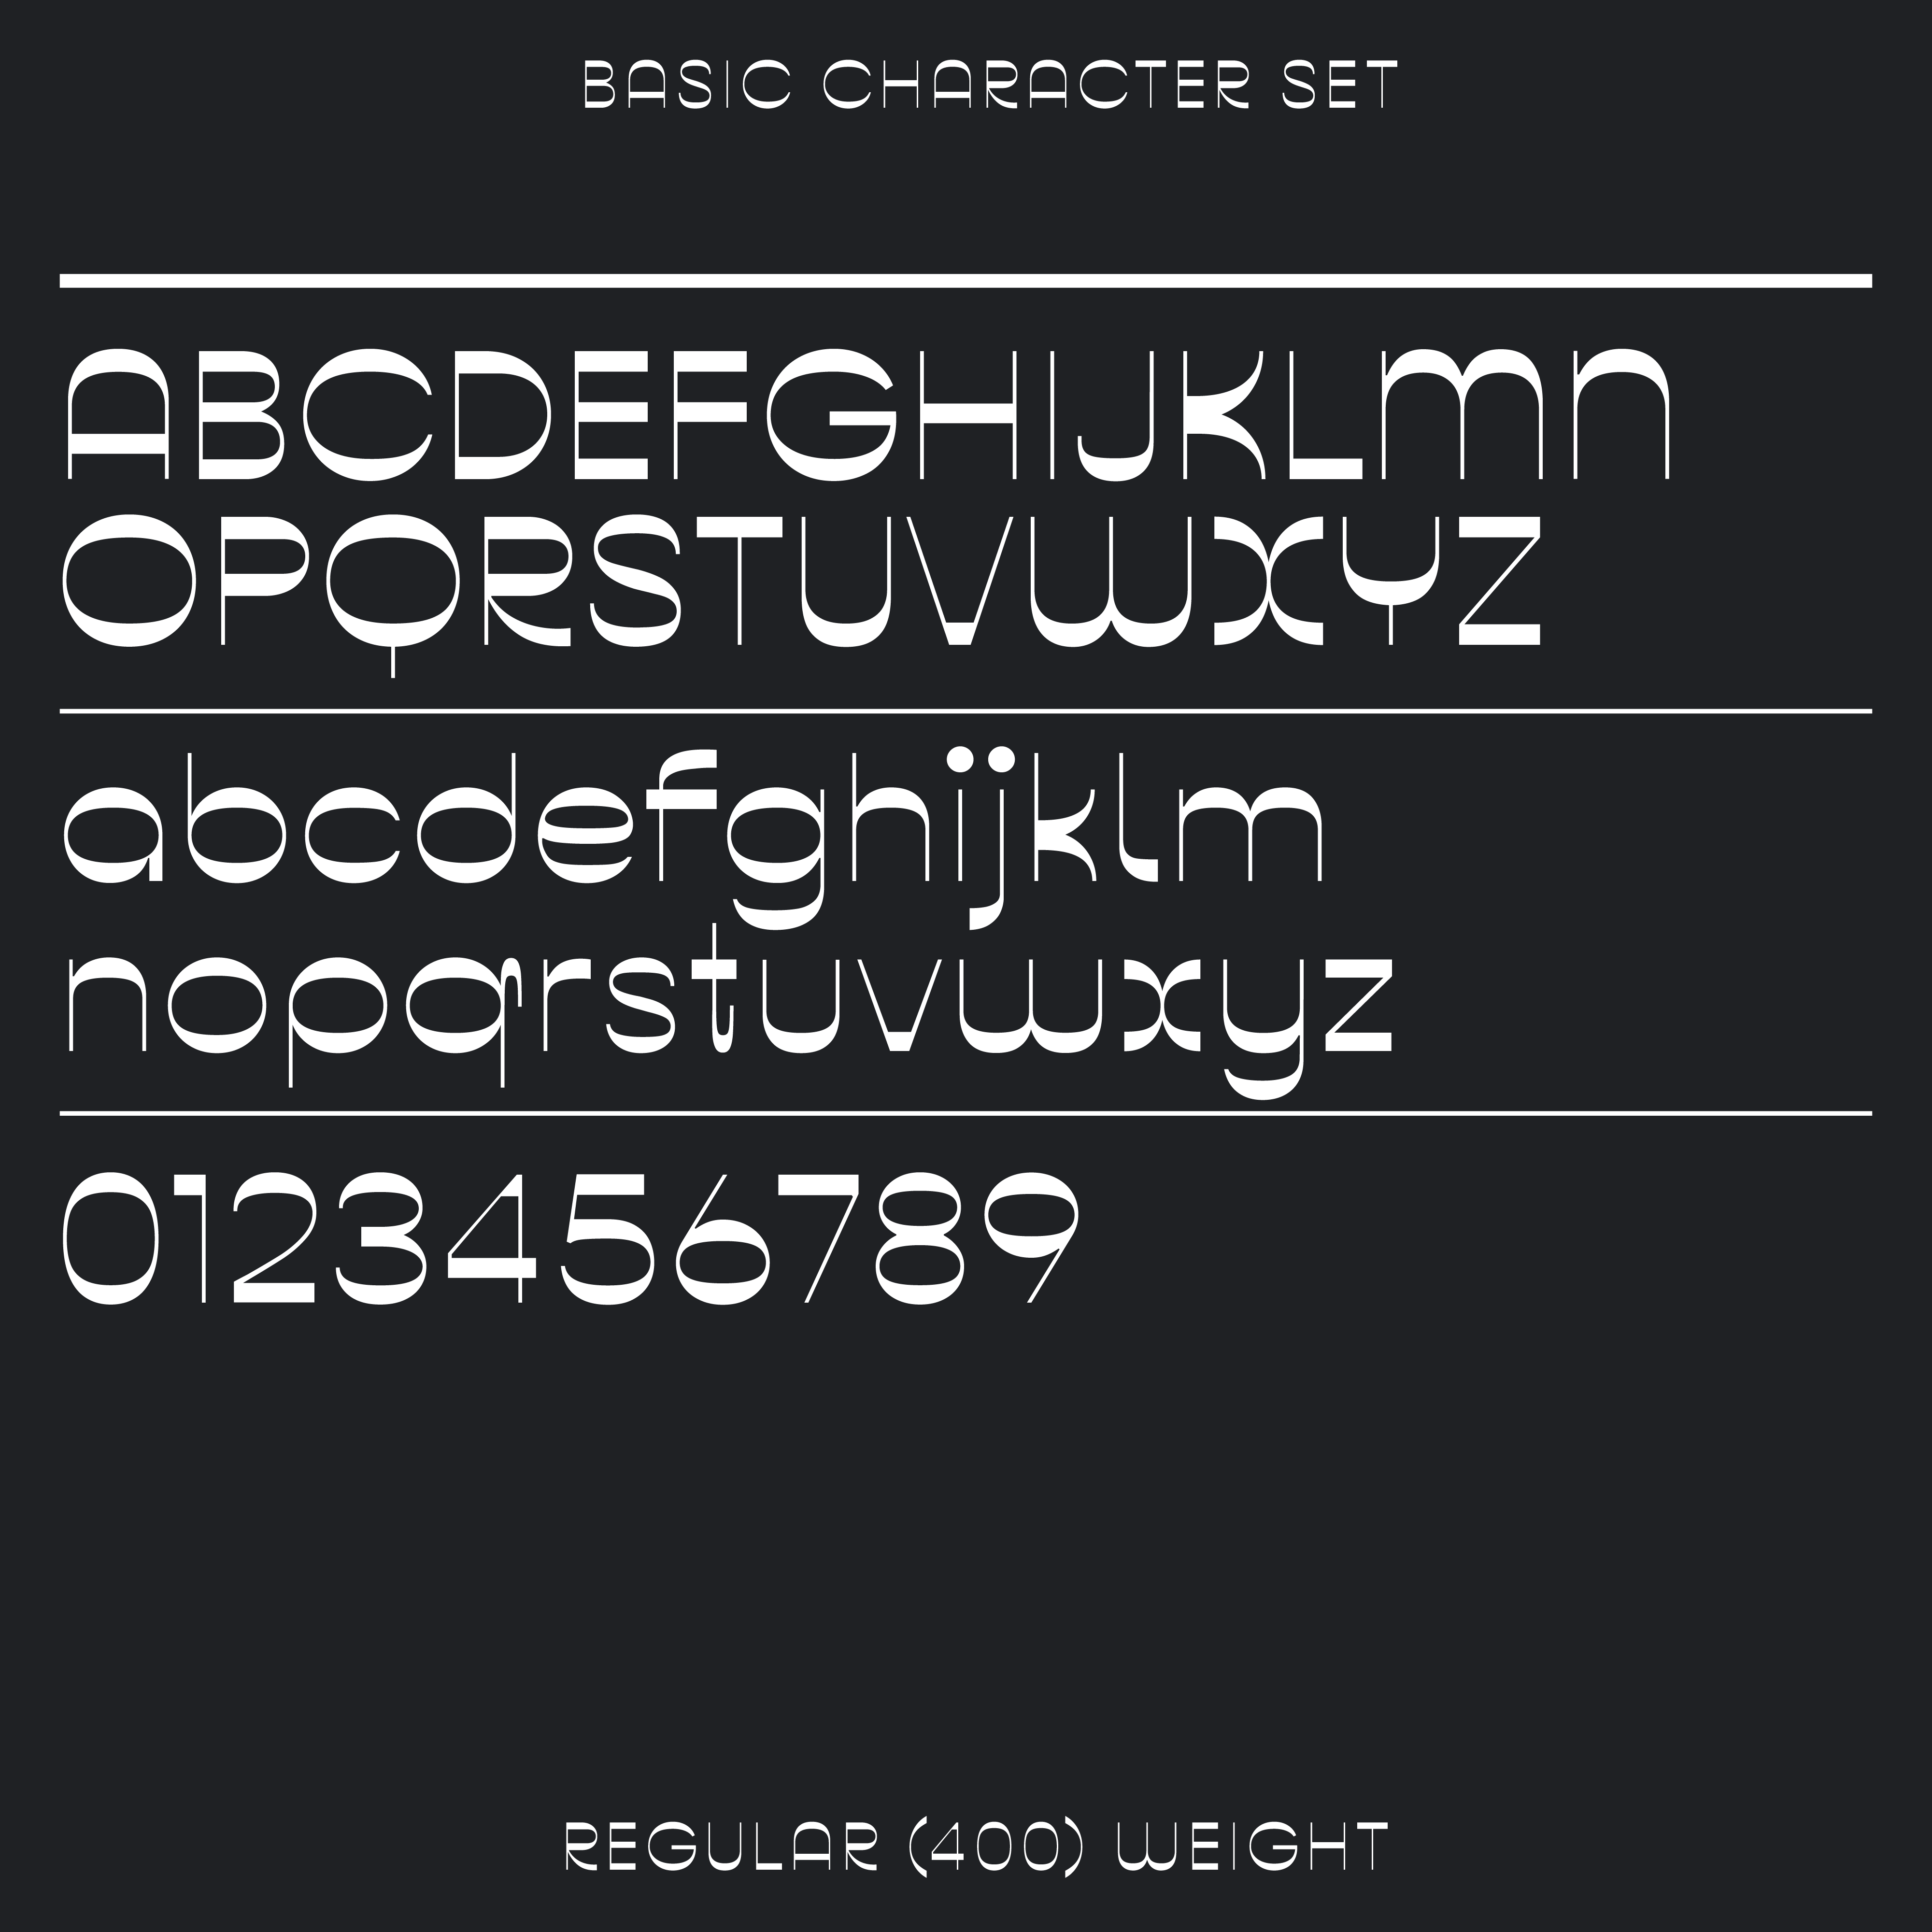 Pout font, basic characters